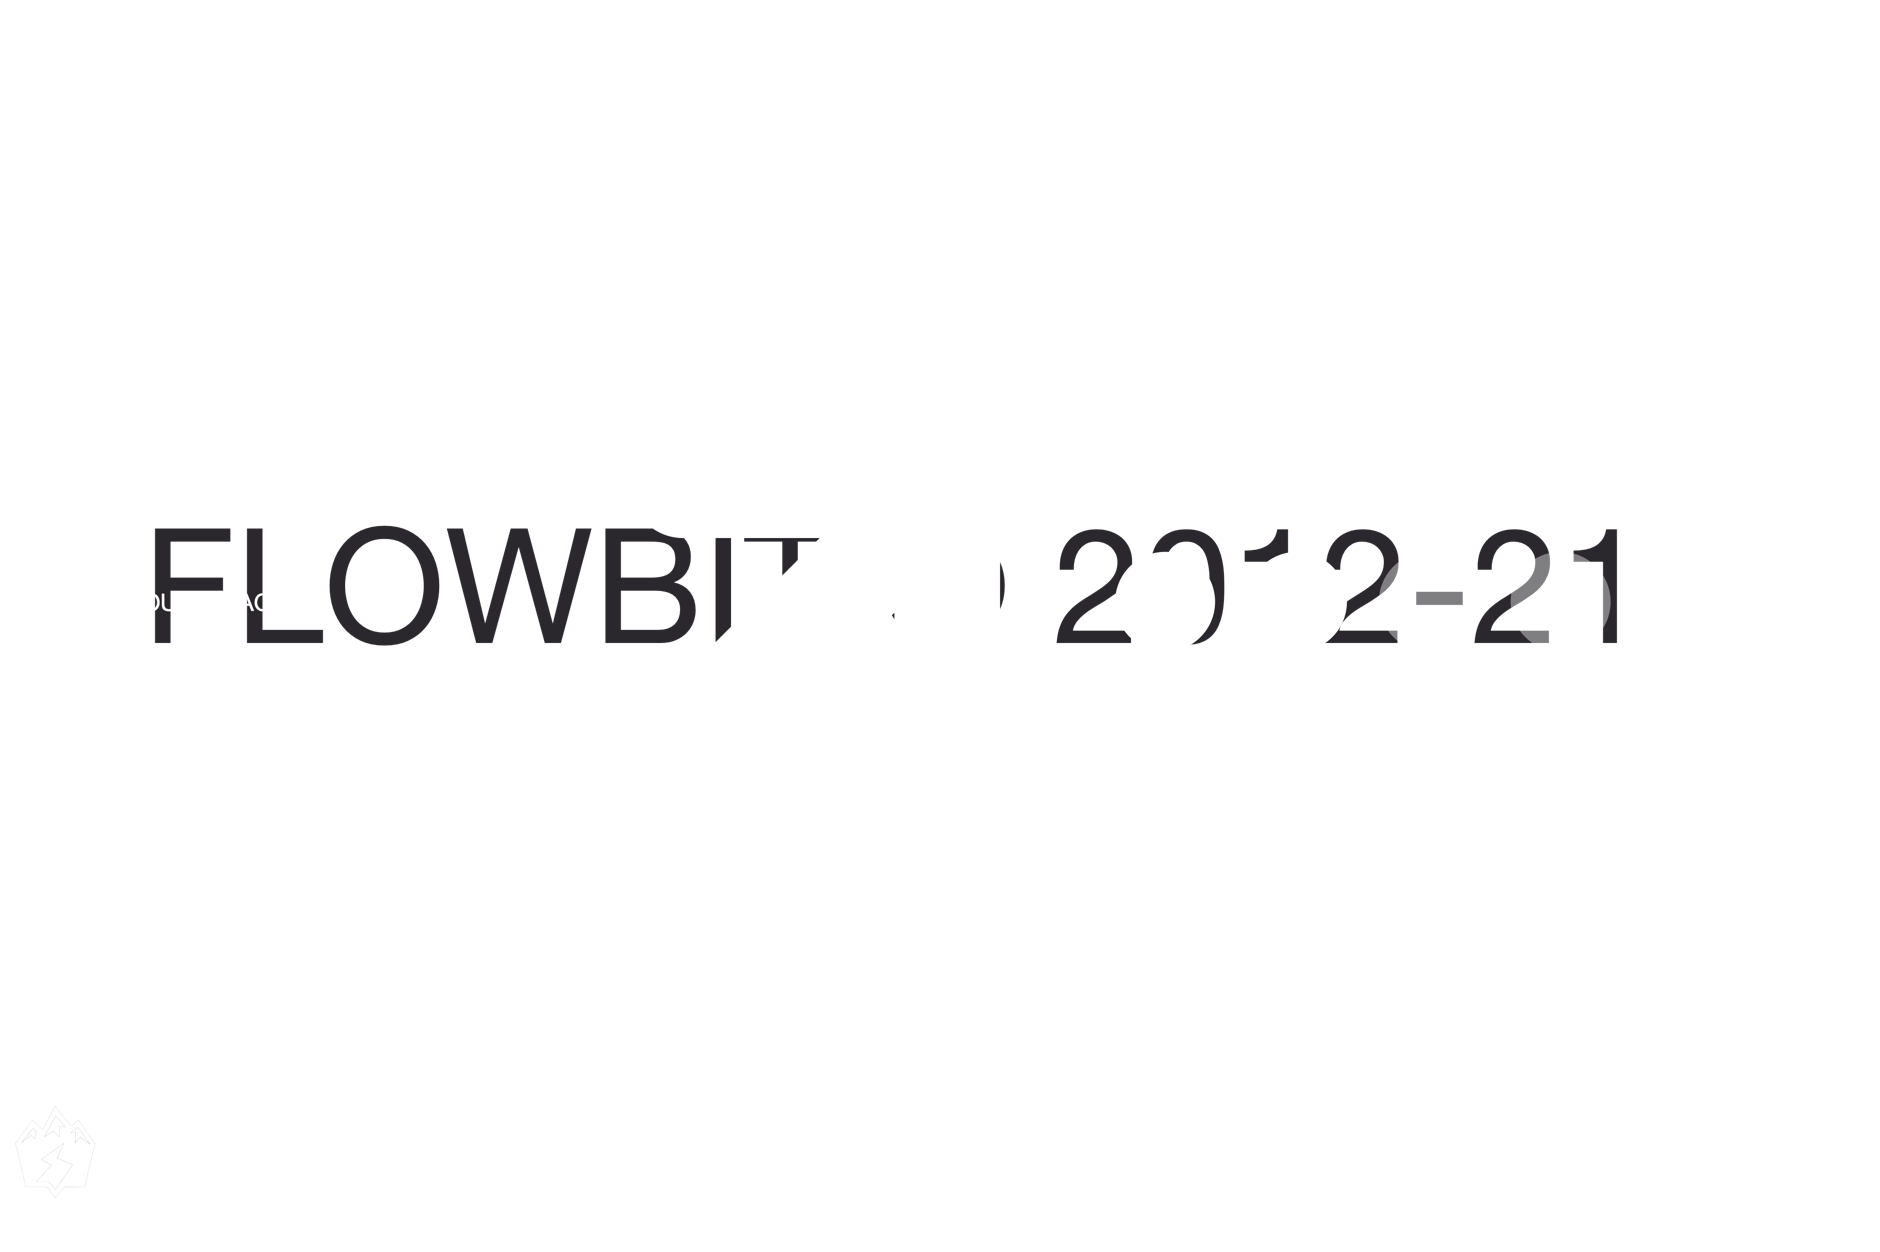 Cloud Computing Options Include IAAS, PAAS, and SAAS